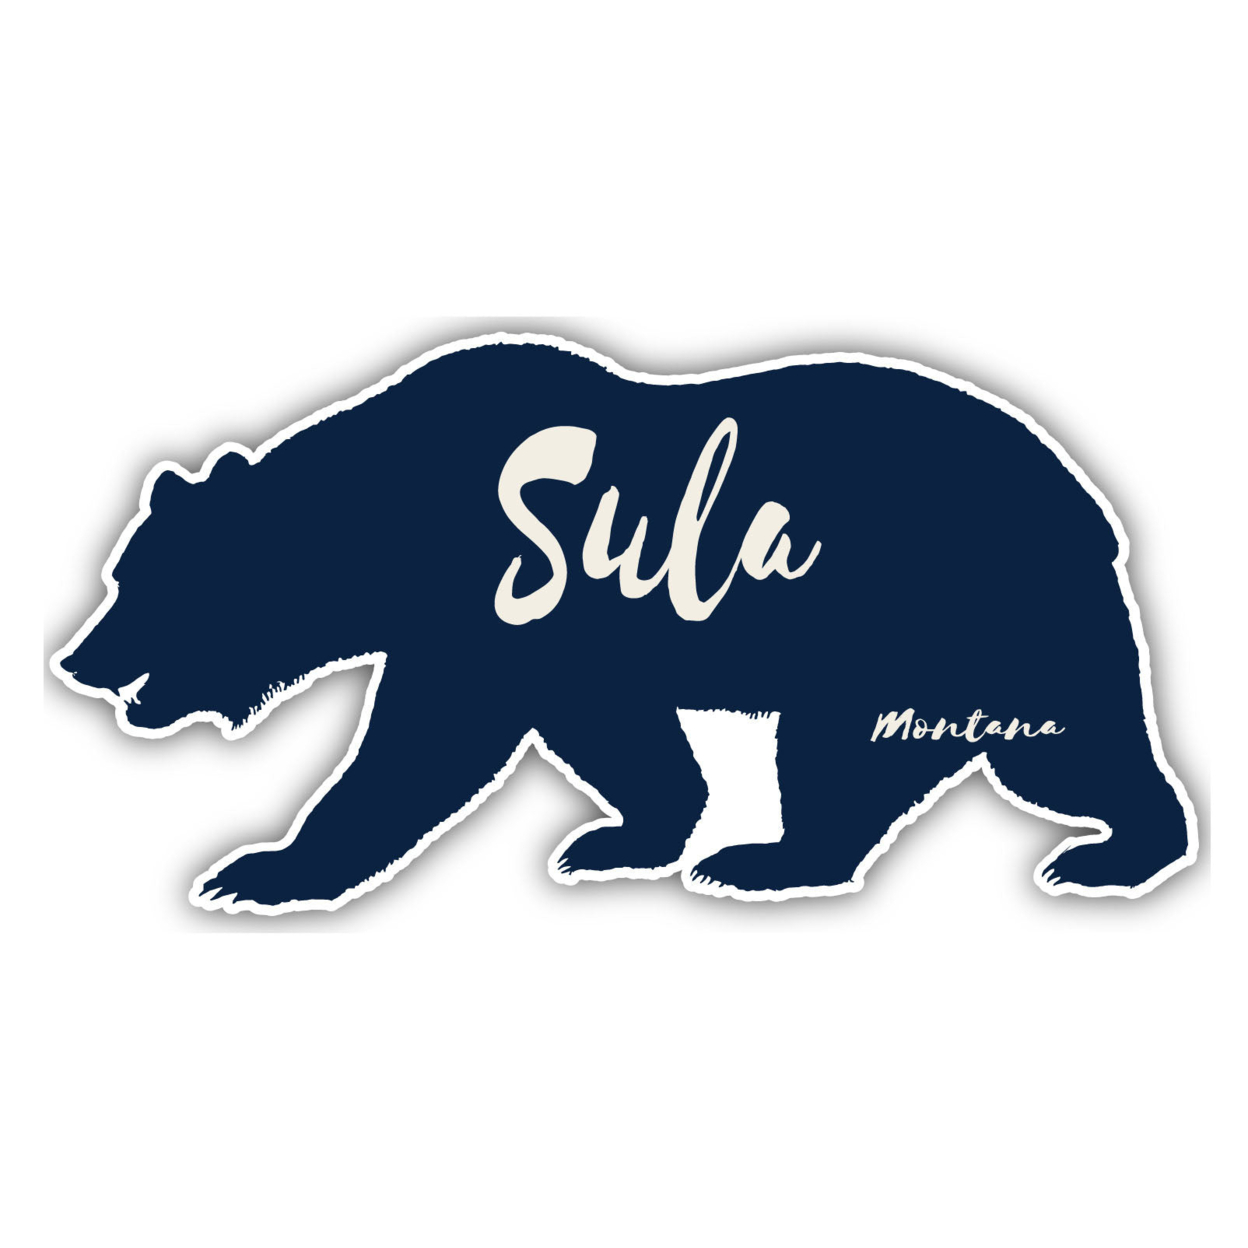 Sula Montana Souvenir Decorative Stickers (Choose Theme And Size) - Single Unit, 4-Inch, Tent